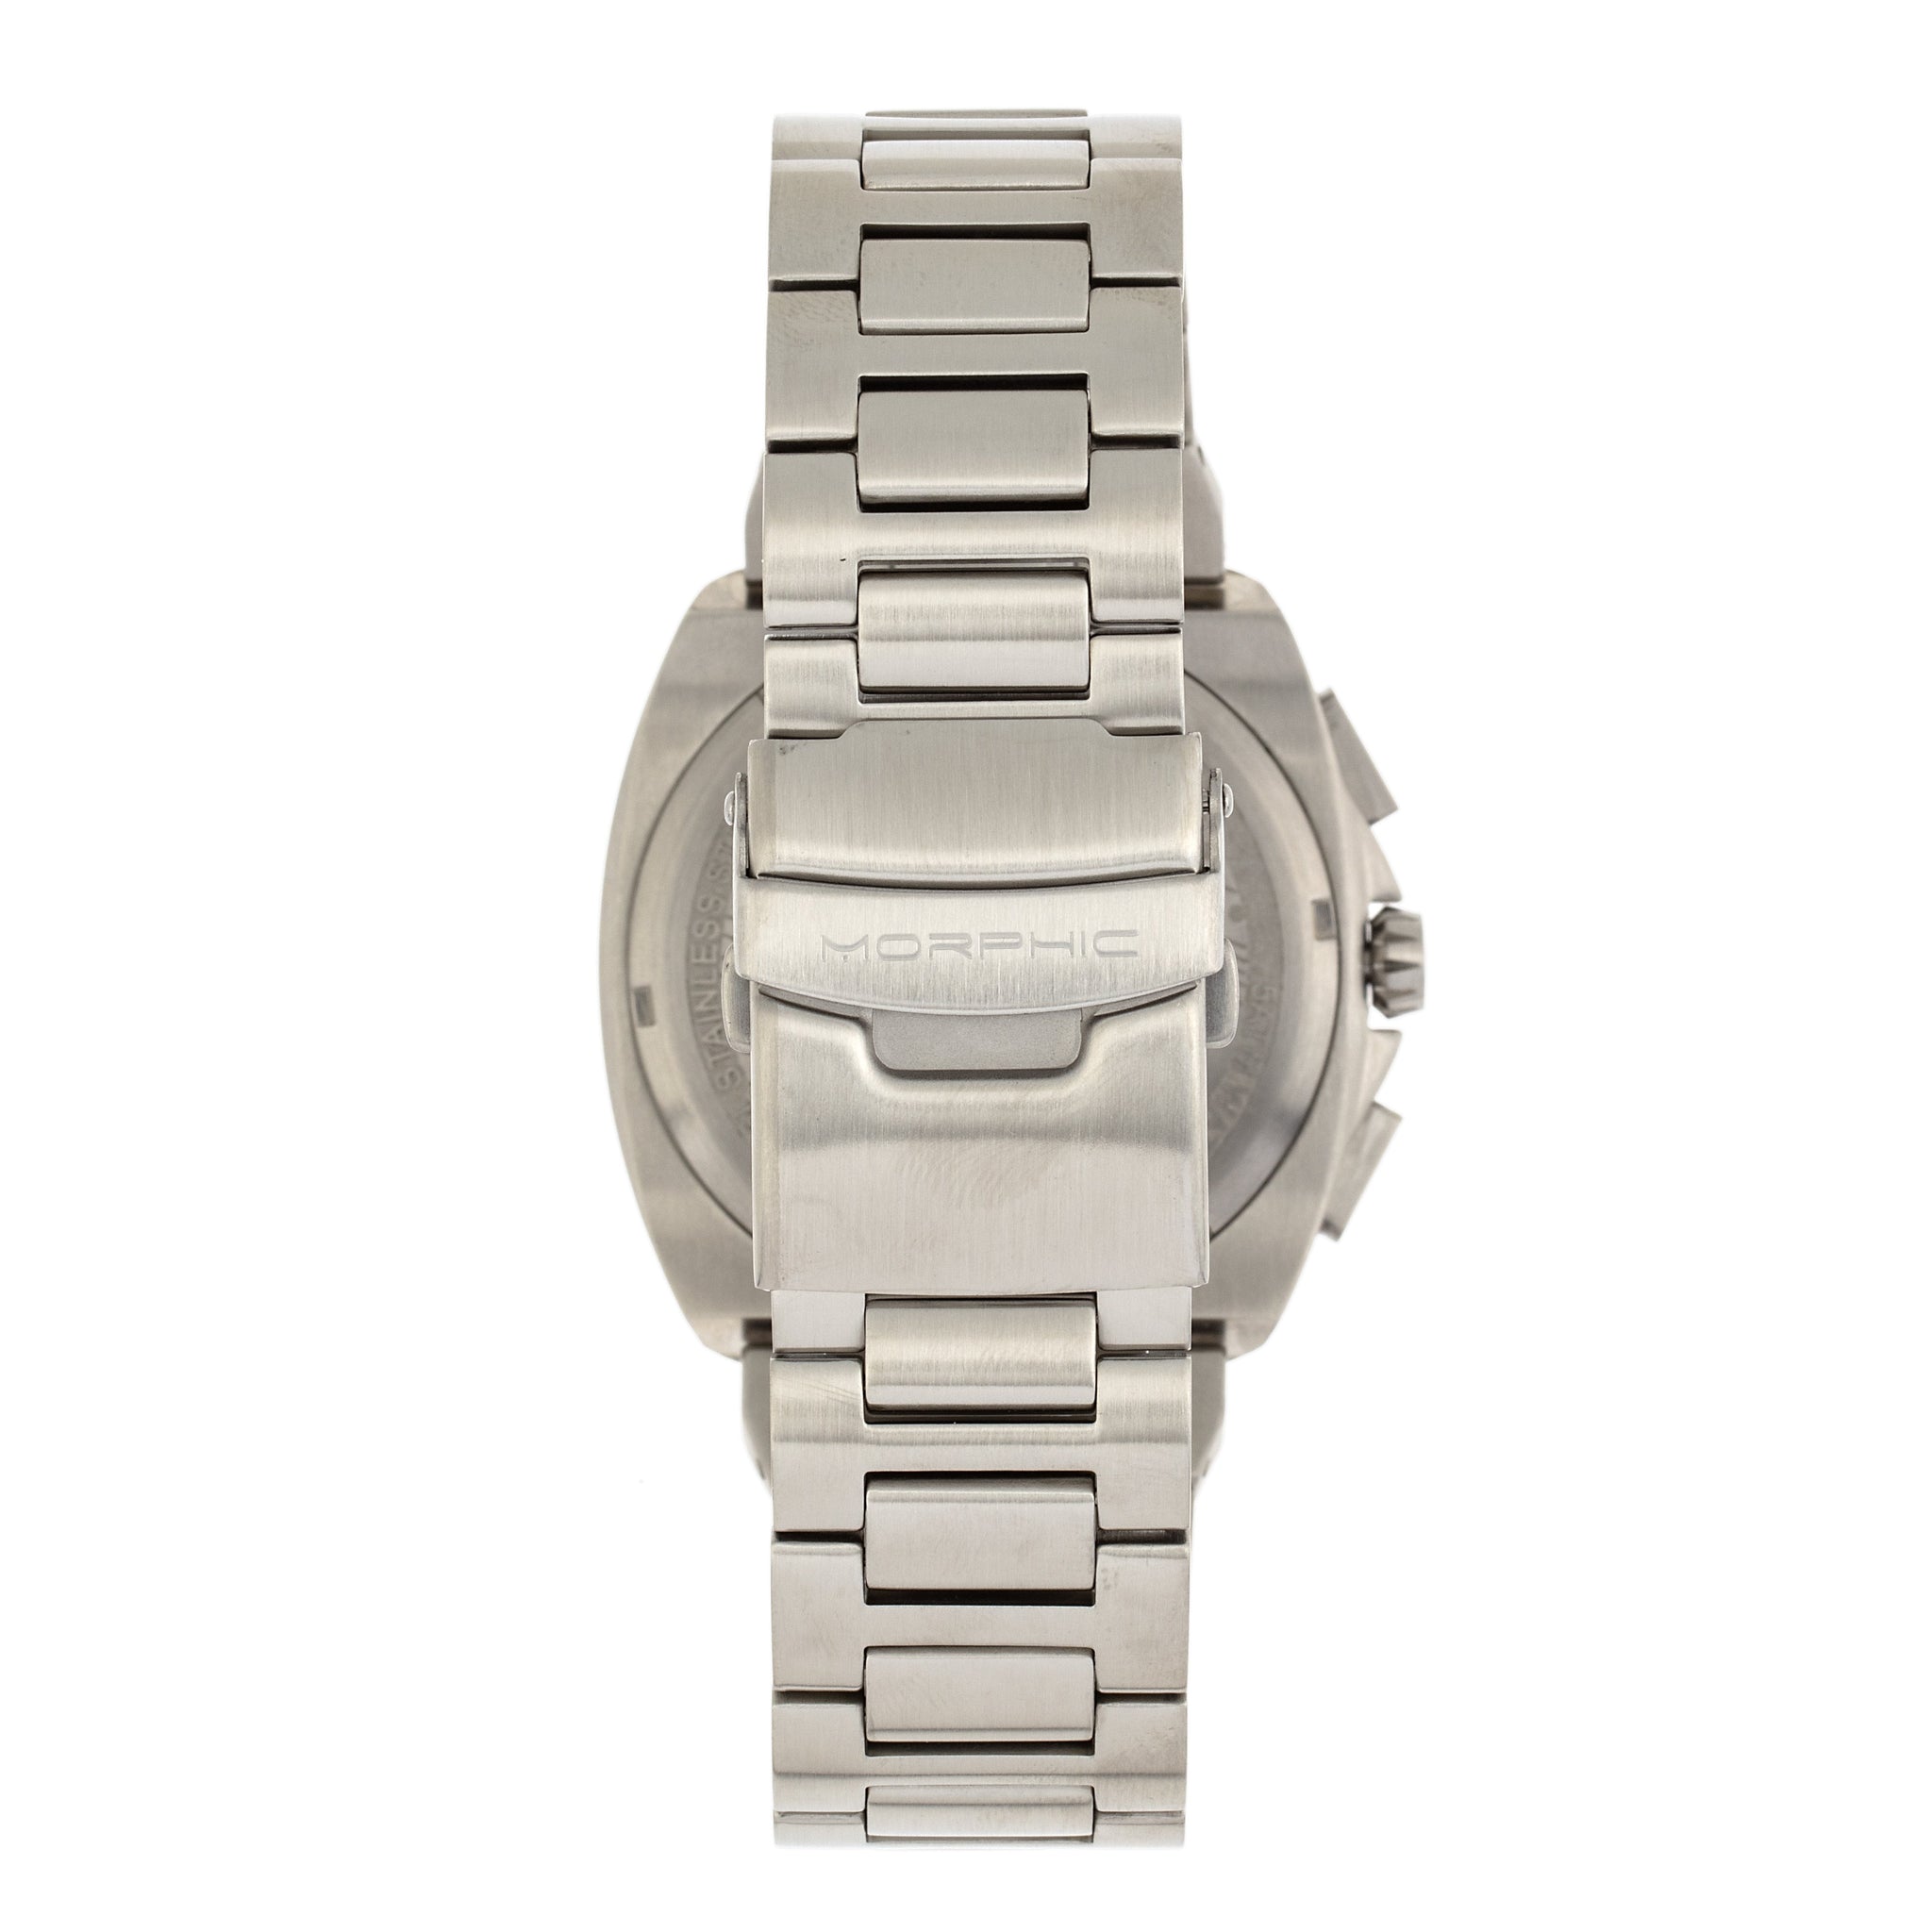 Morphic M79 Series Chronograph Bracelet Watch - Silver/Black - MPH7902